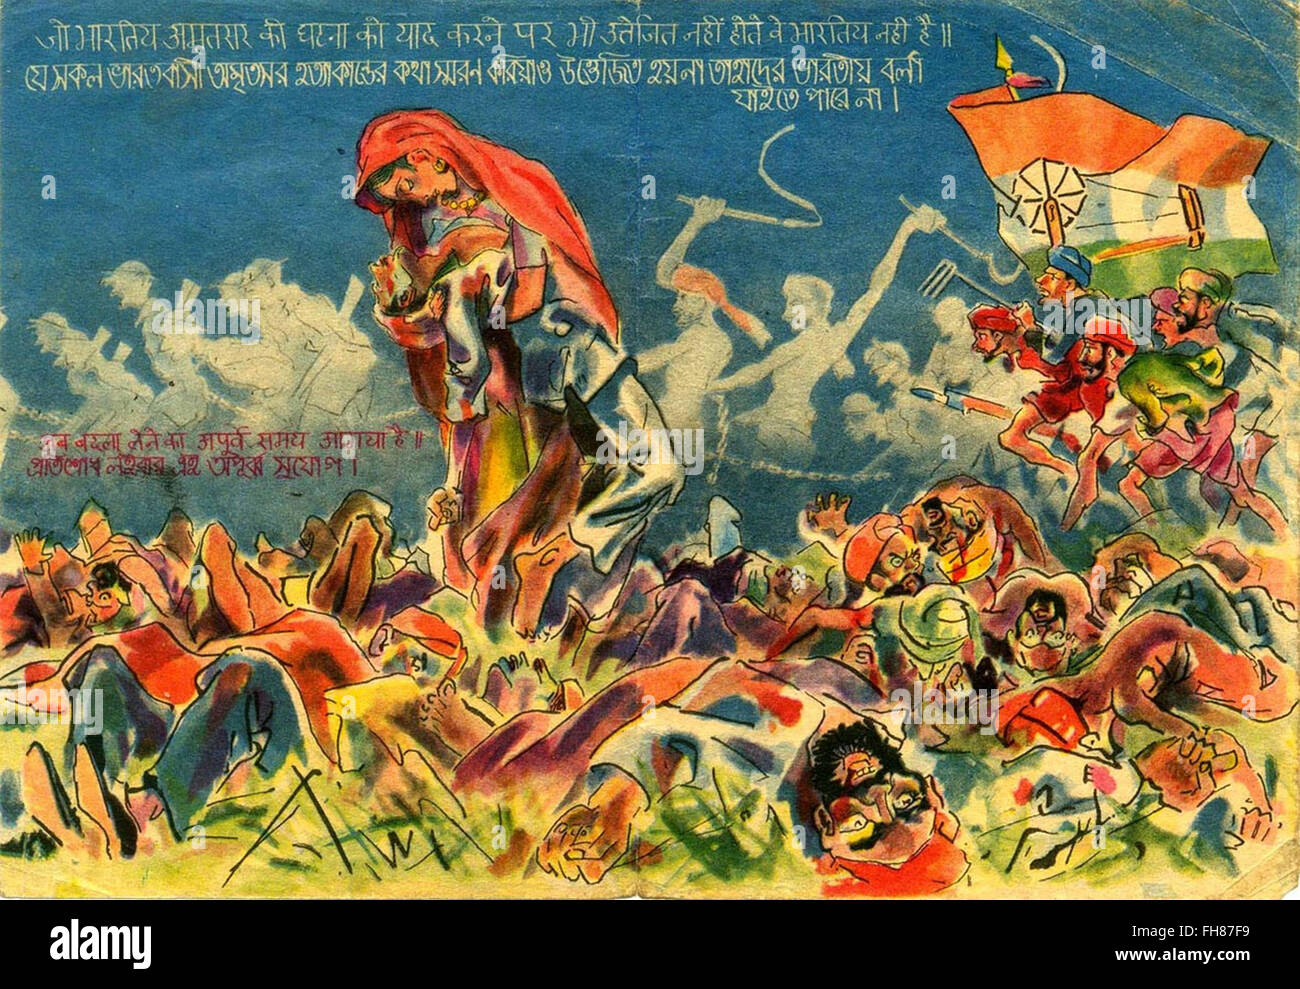 Japanische Propaganda gezielt indische Truppen gegen Briten - Propaganda Poster - WWII Stockfoto